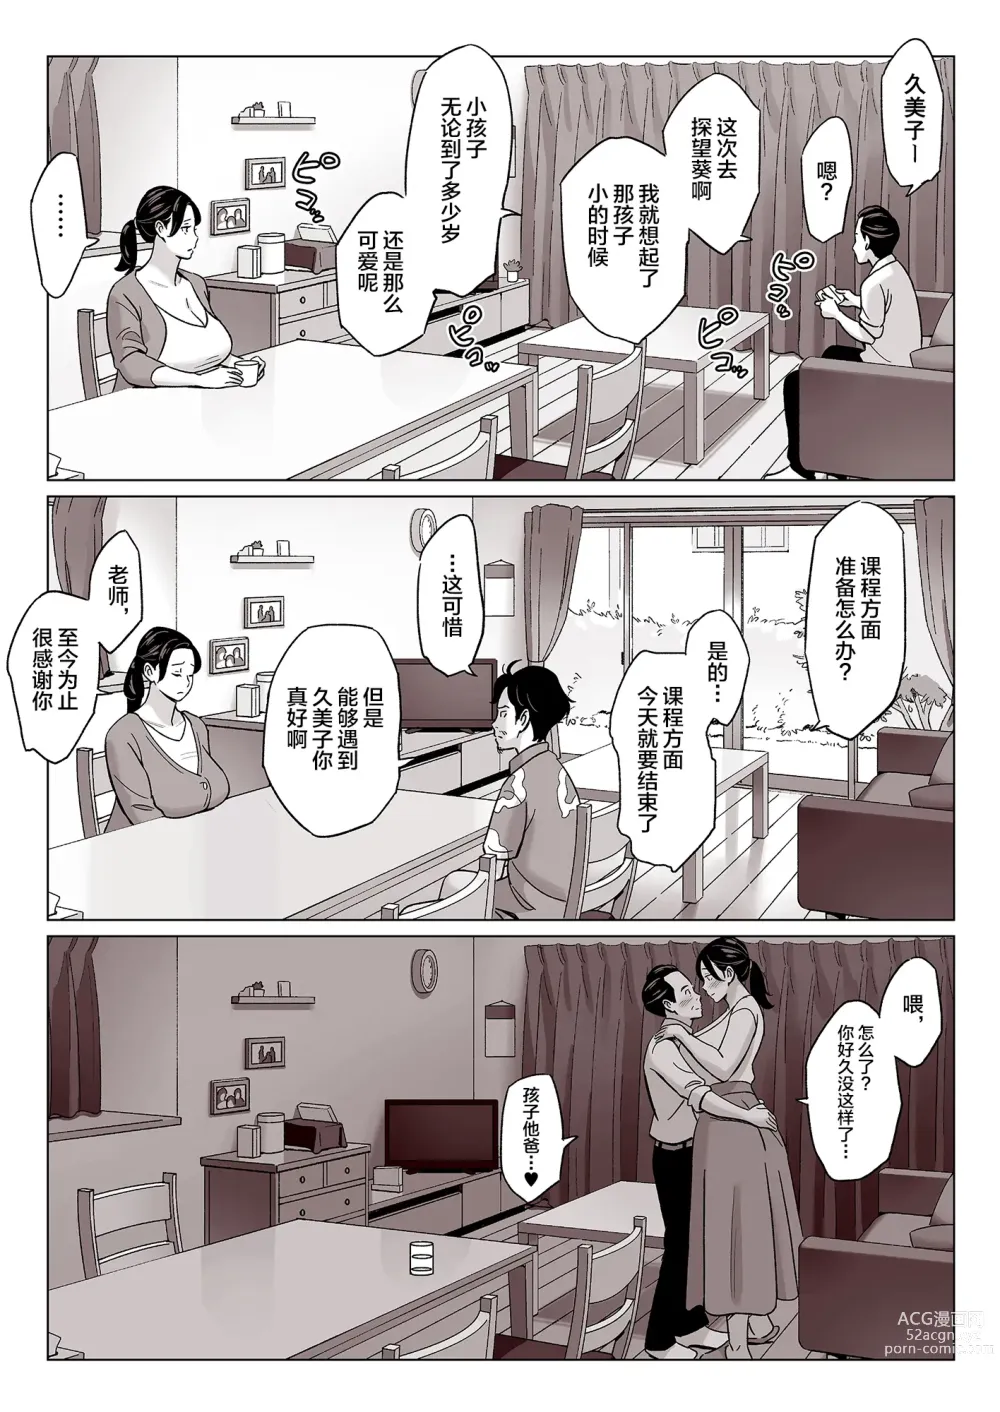 Page 268 of manga Muchi Niku Heaven de Pan Pan Pan